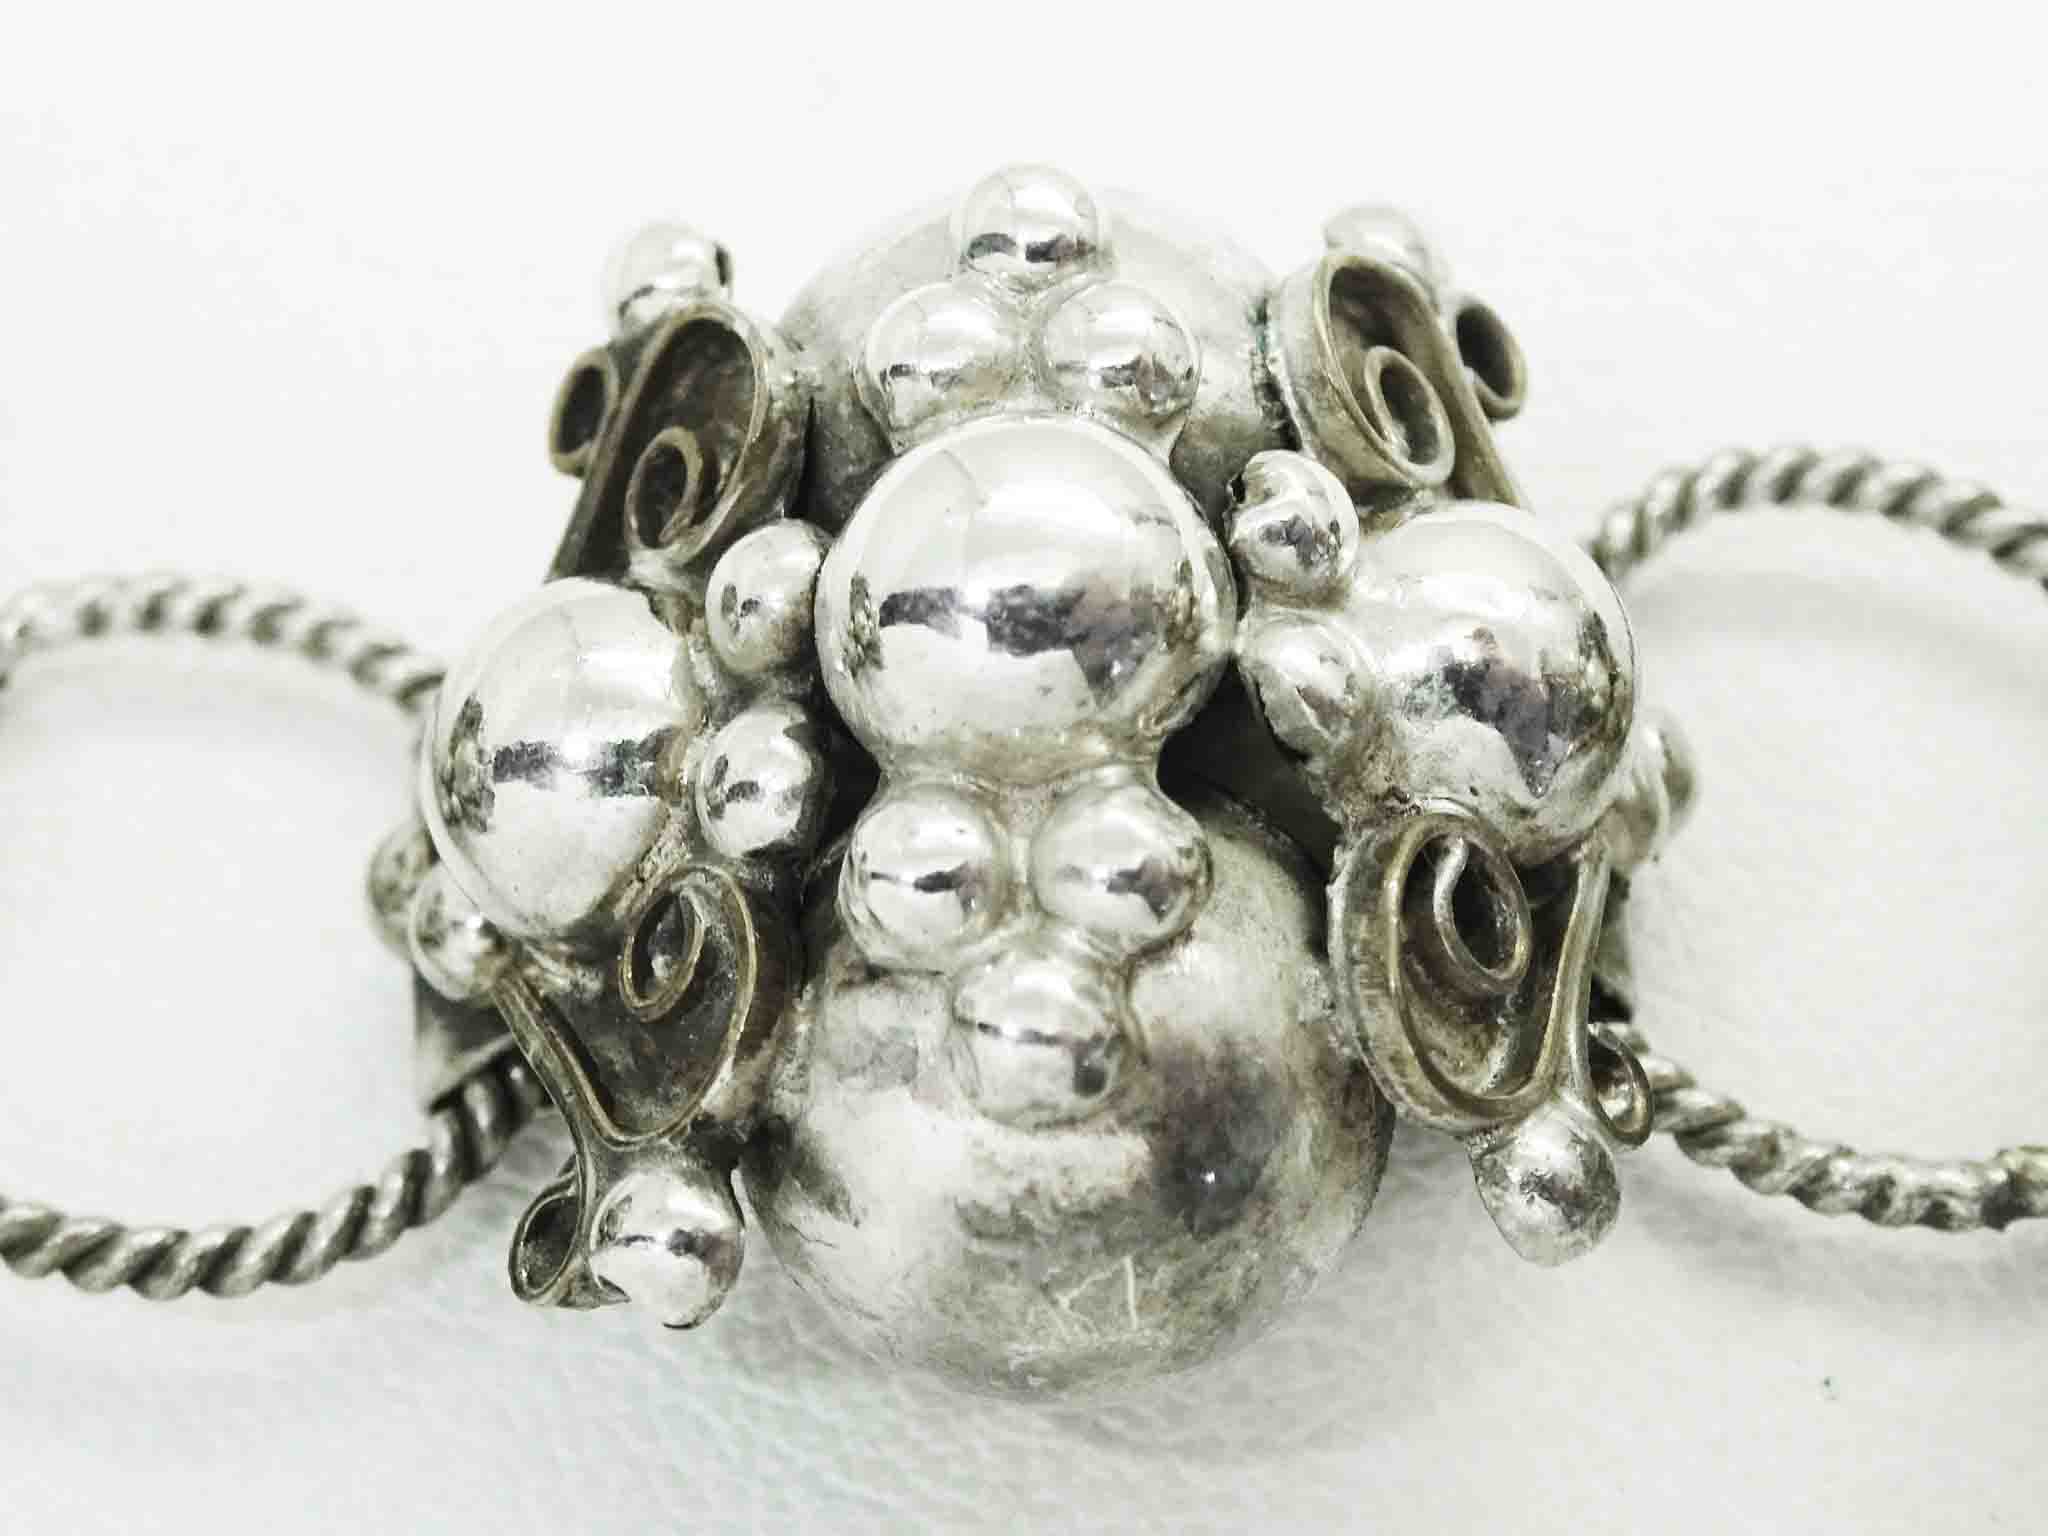 Glacier Adult Bracelet (6mm Beads) 6.5 Inches / Sterling Silver